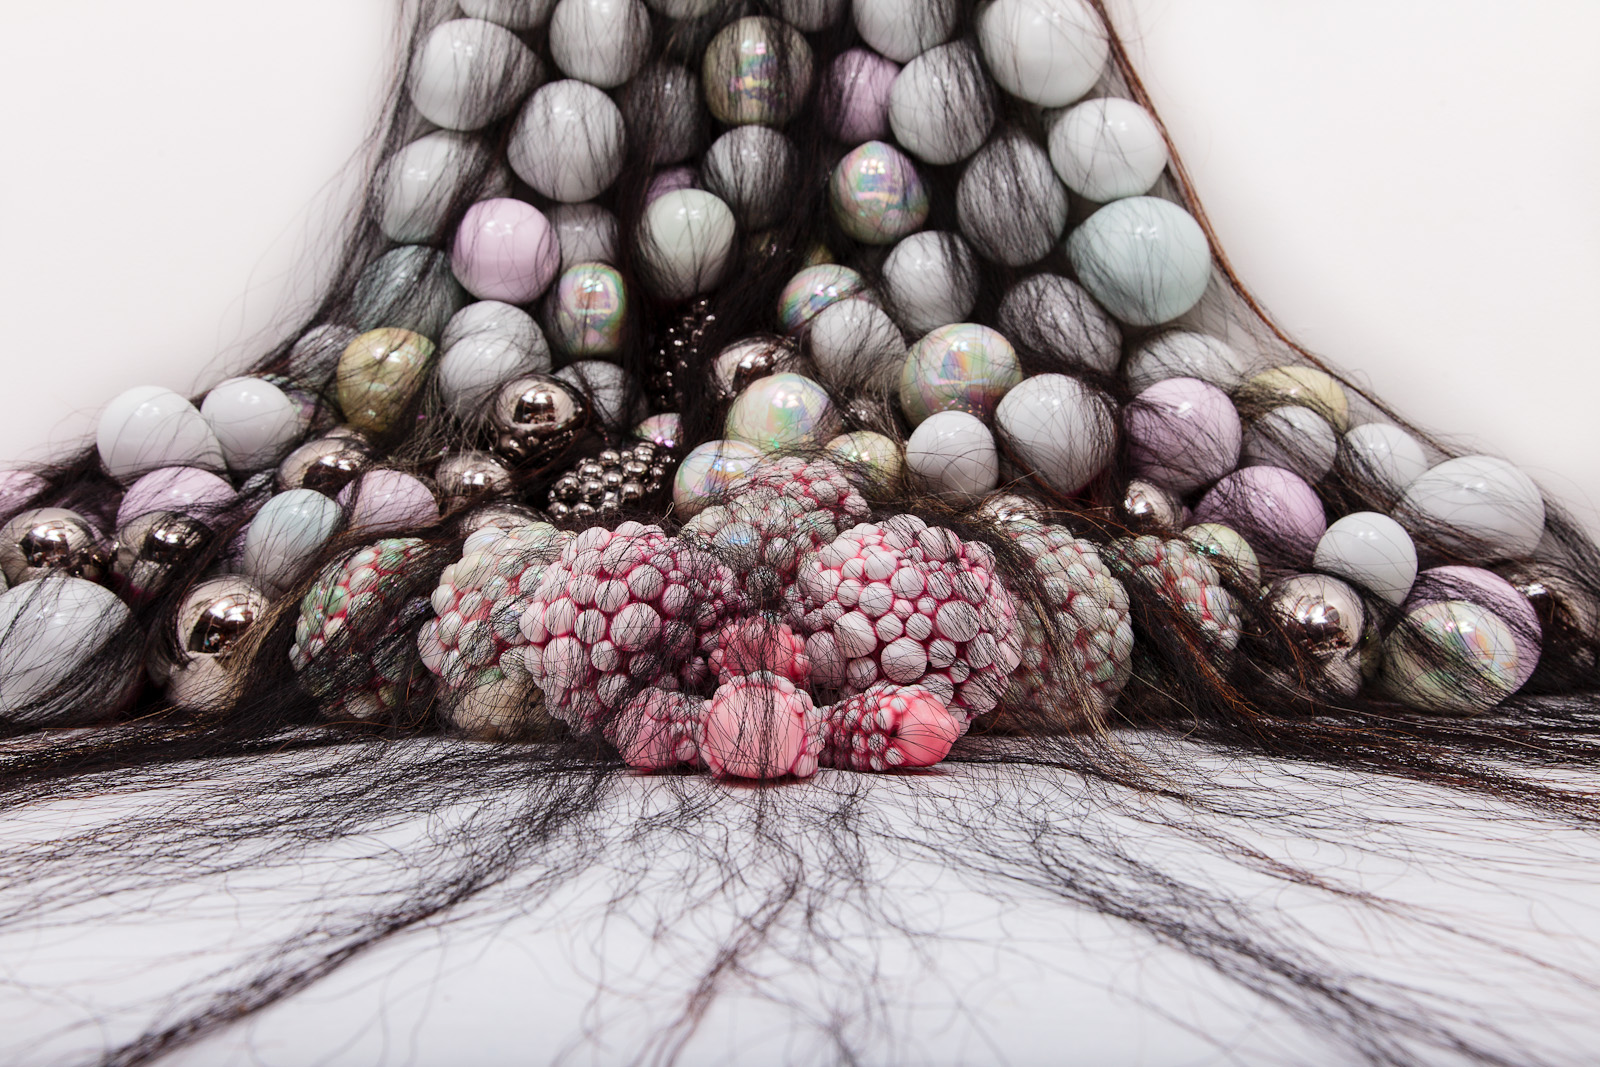 Juz Kitson -Changing Skin (detail) 2013, Southern Ice porcelain / Organic sculptures